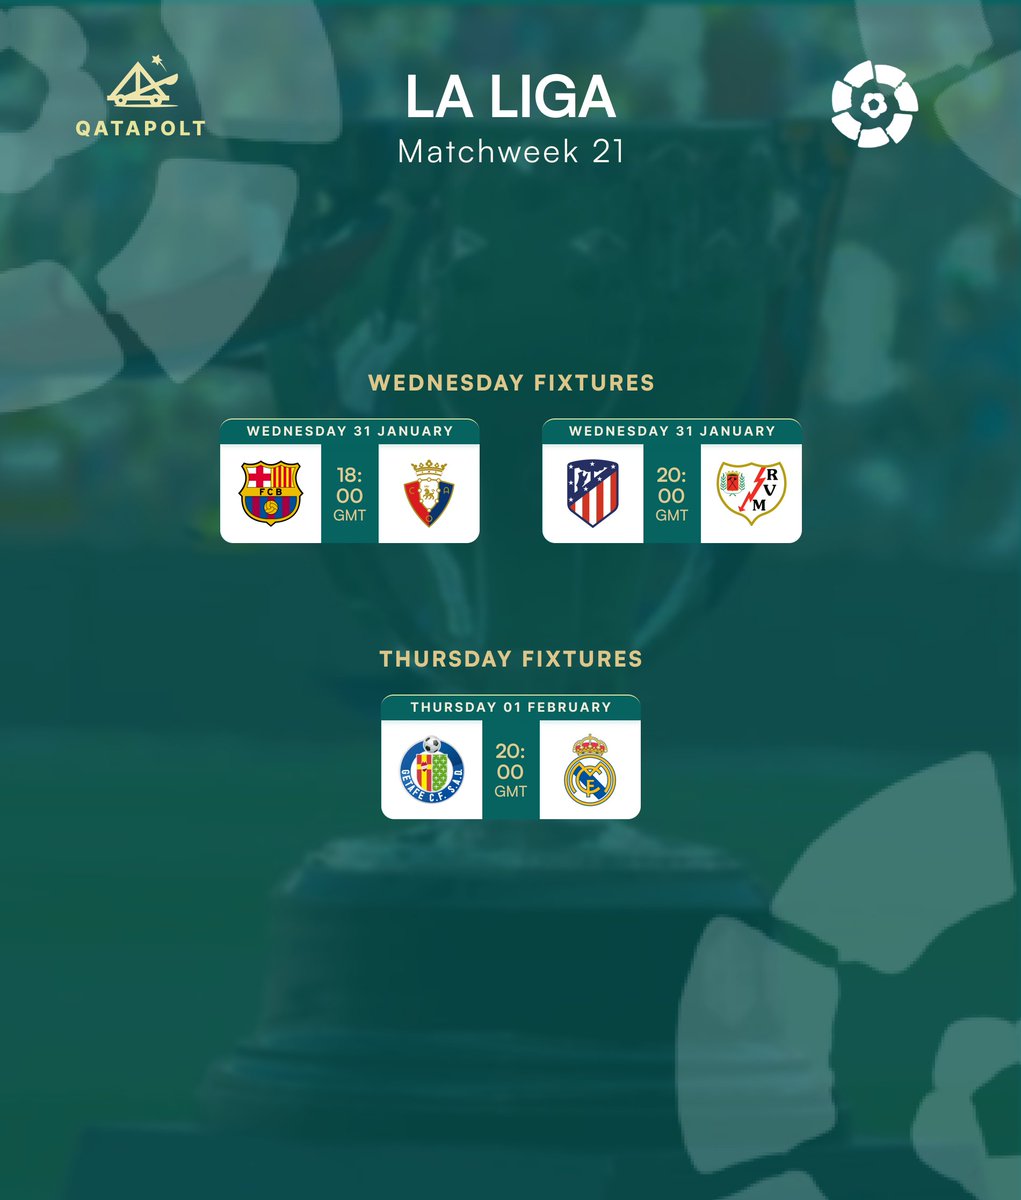 LaLiga fixtures are out! ⚽️🗓️ Ready for the football rollercoaster. 🚀
_
_
_
#LaLiga #FixtureRelease #football #madrid #barcelona 
(Enzo , ronaldo, zlatan, AL nasser)